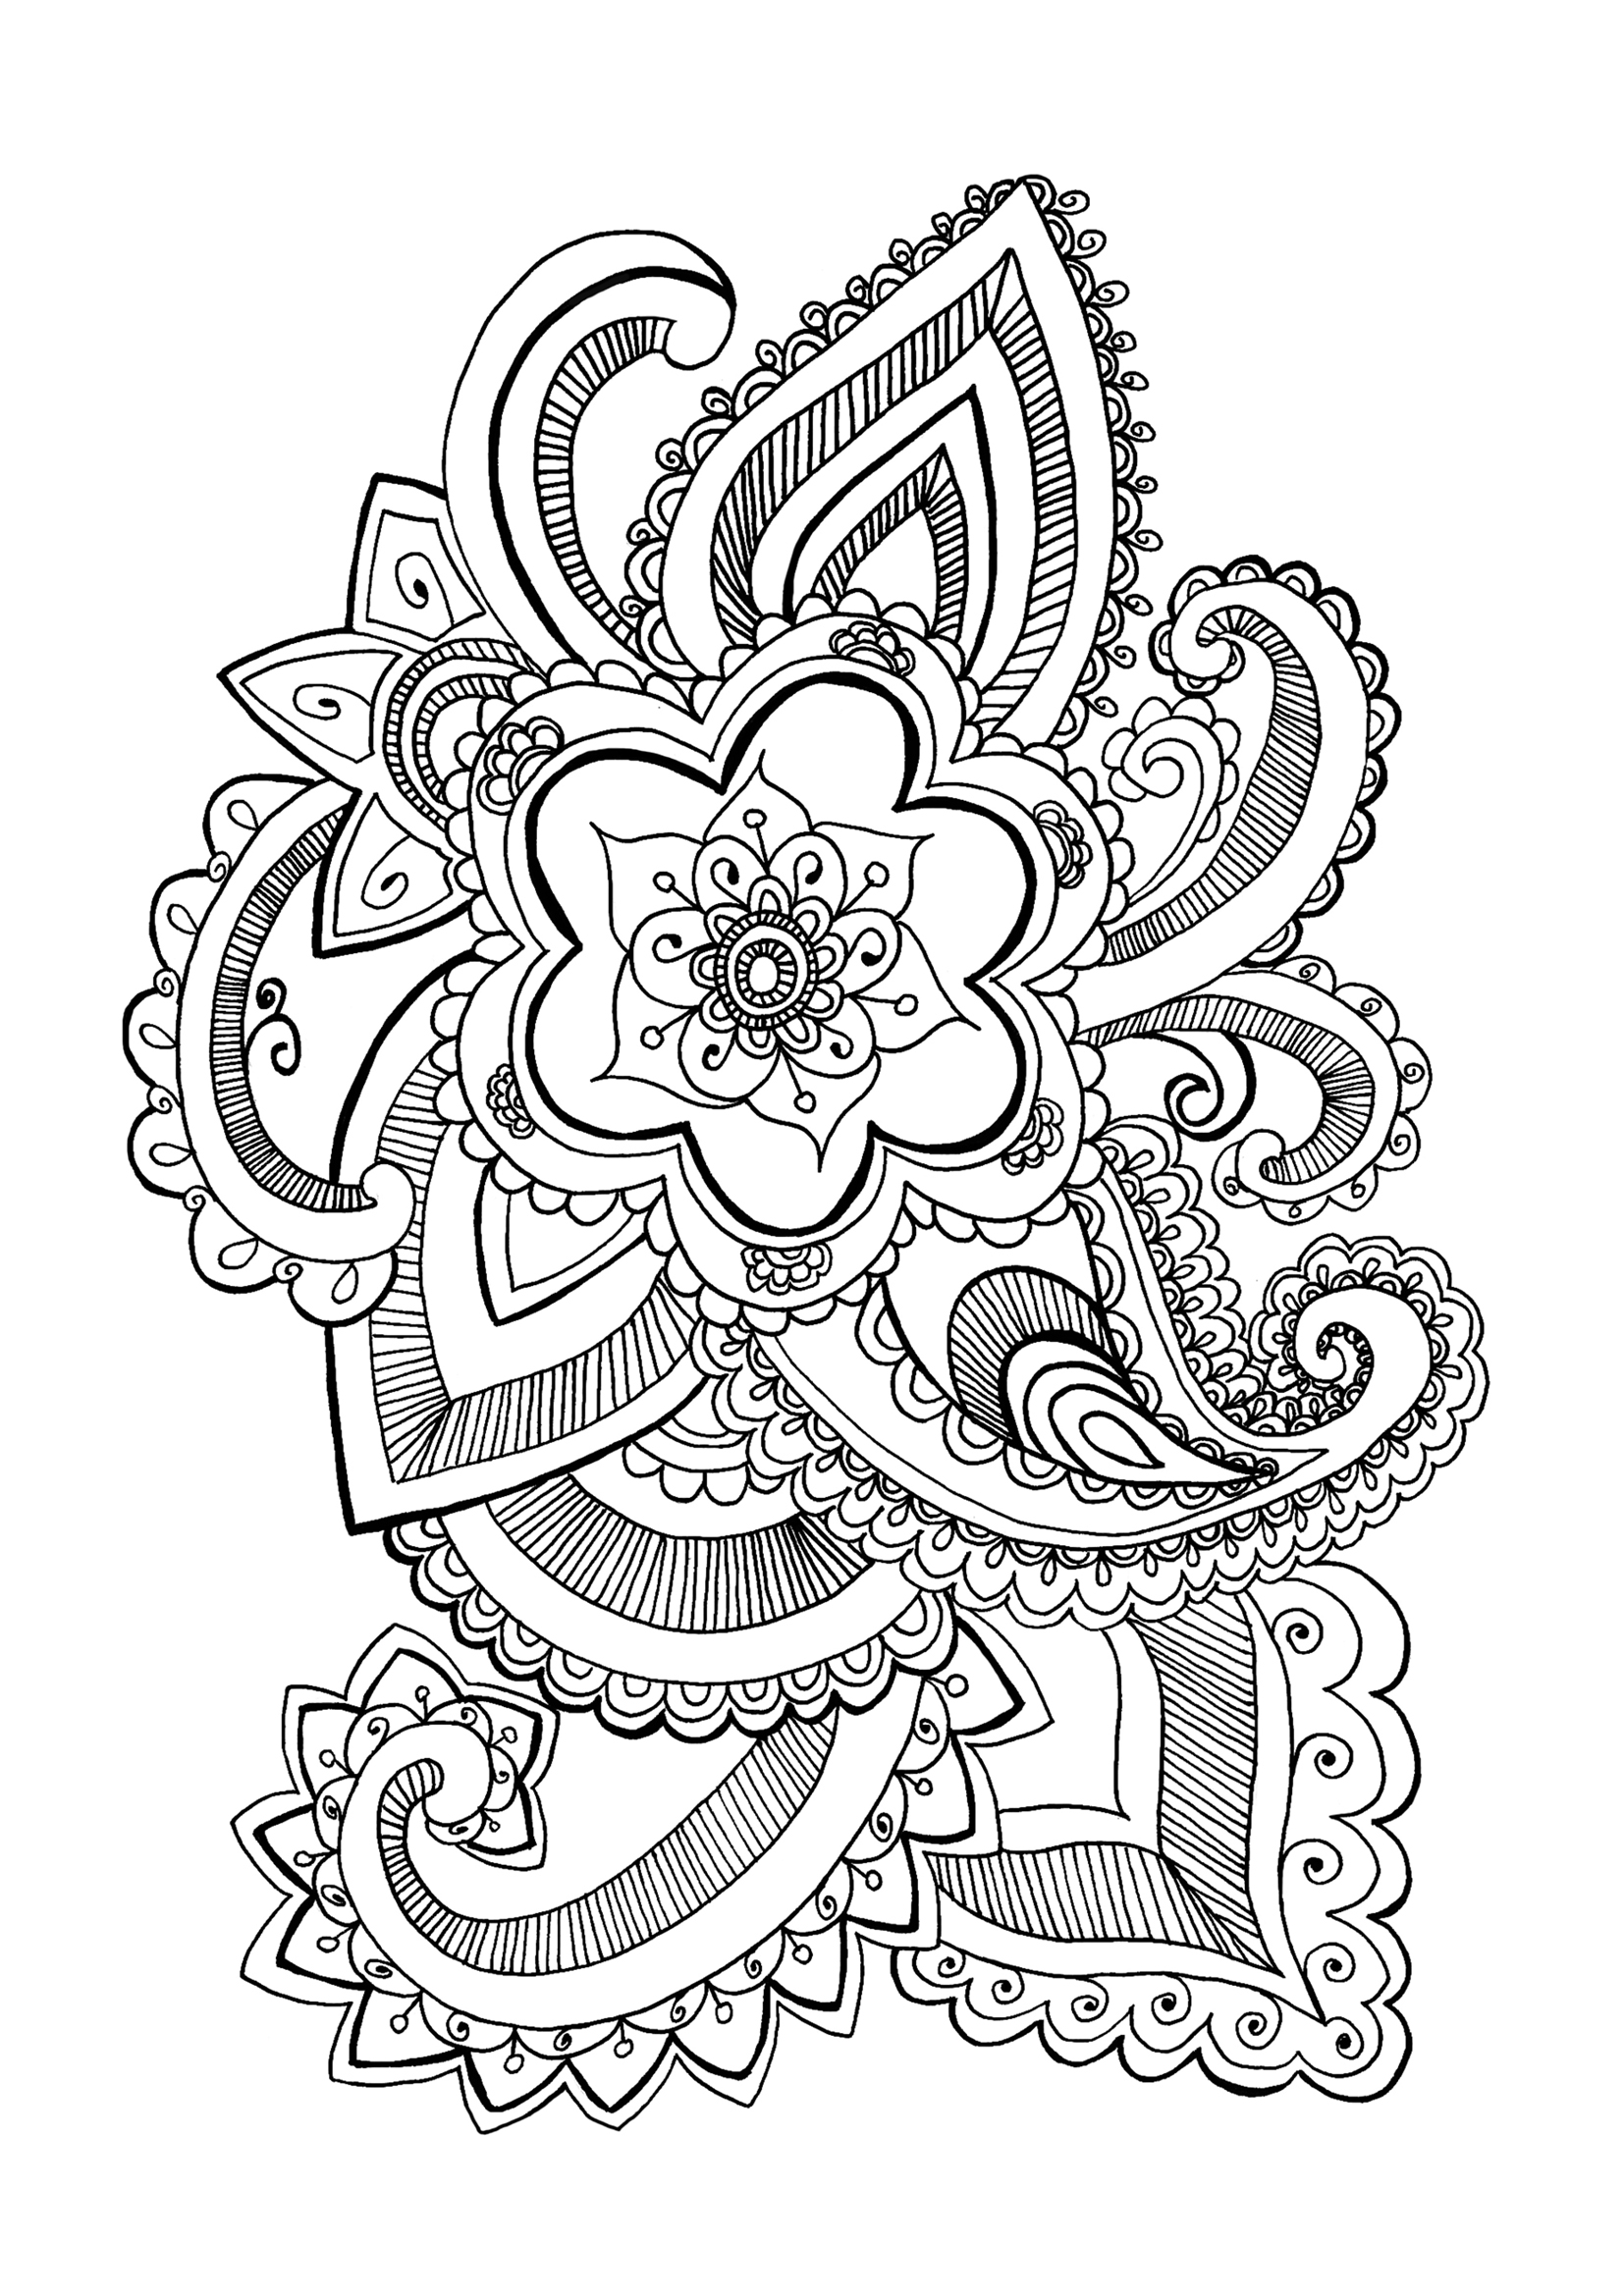 Flower Mandala Printable Coloring Page -   Mandala coloring books,  Abstract coloring pages, Mandala coloring pages